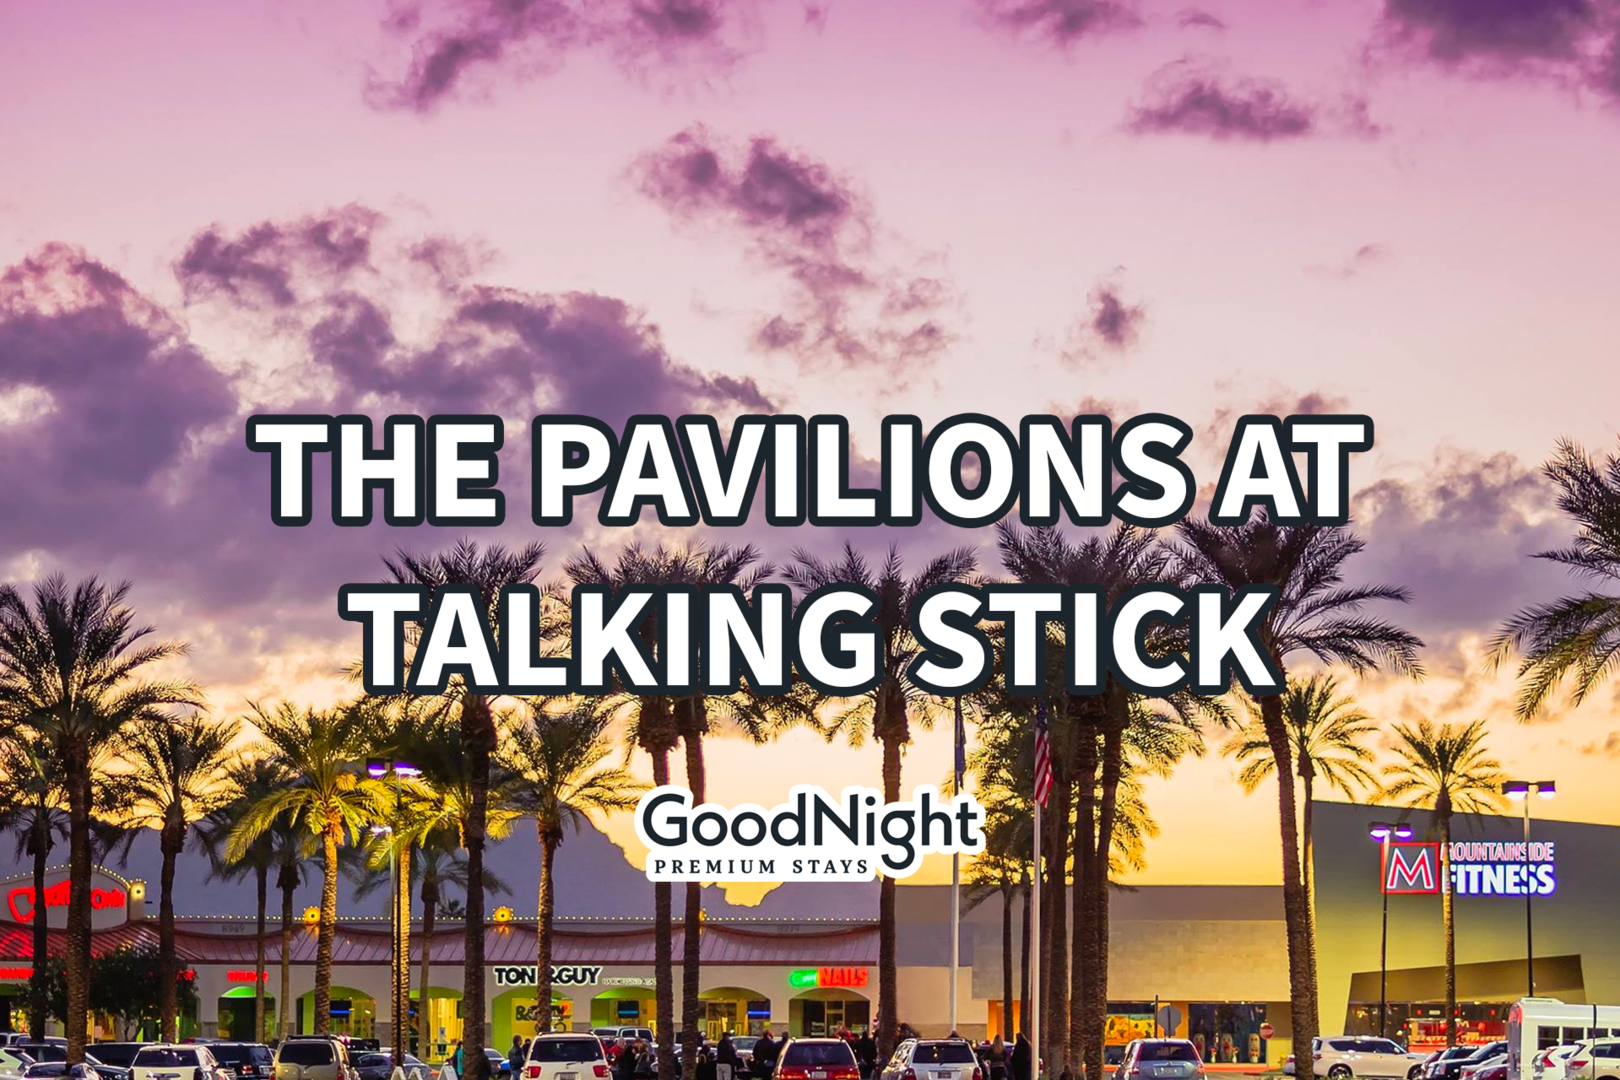 10 mins: The Pavilions at Talking Stick